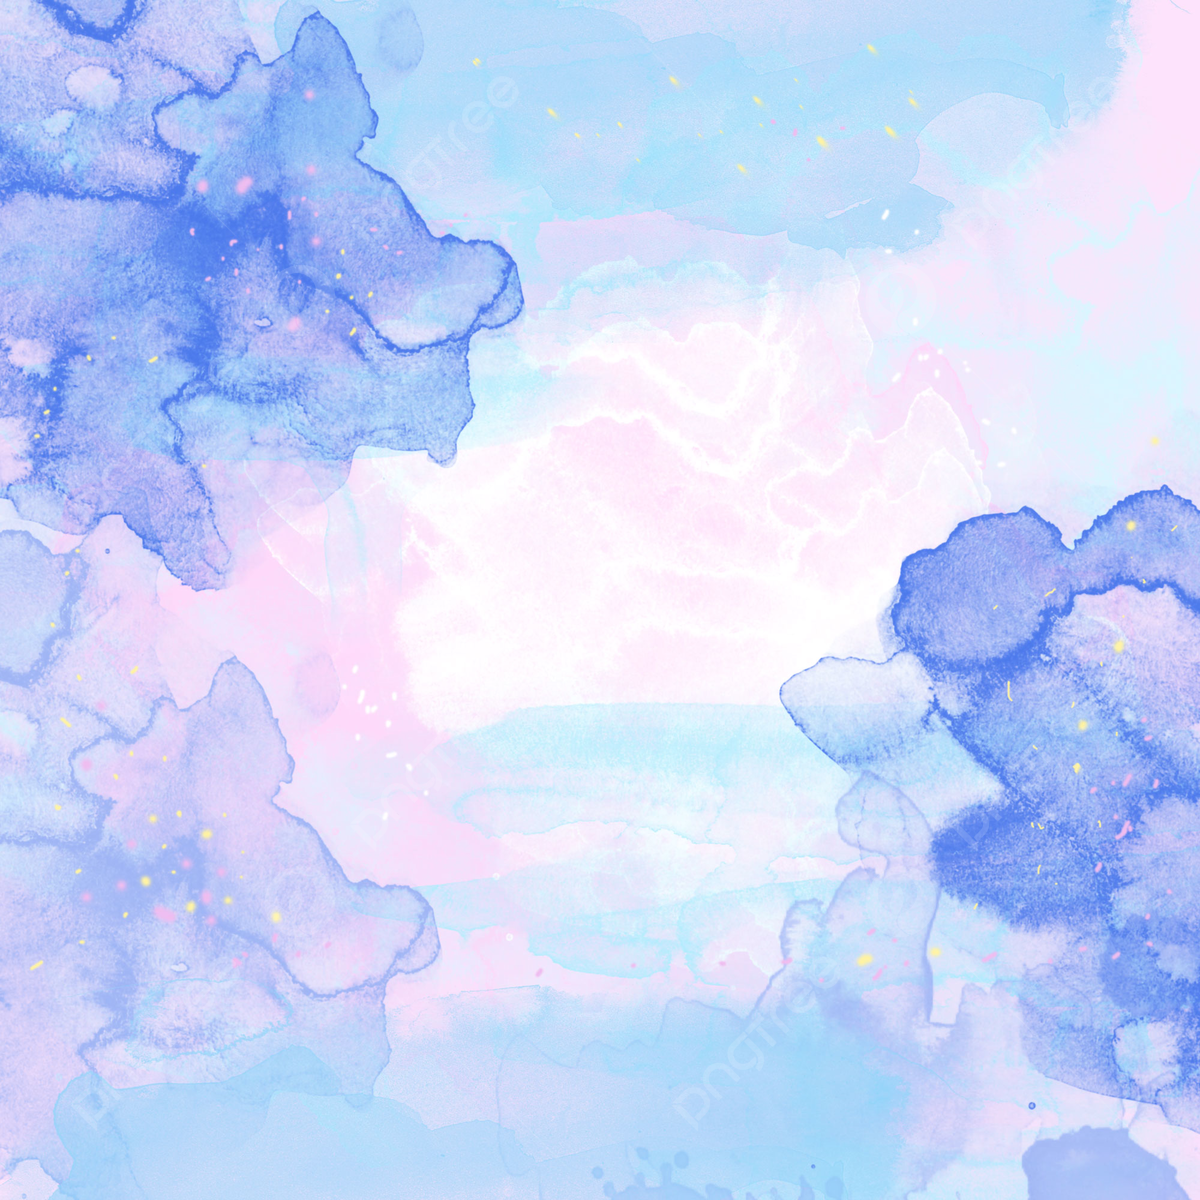 Soft Blue Background